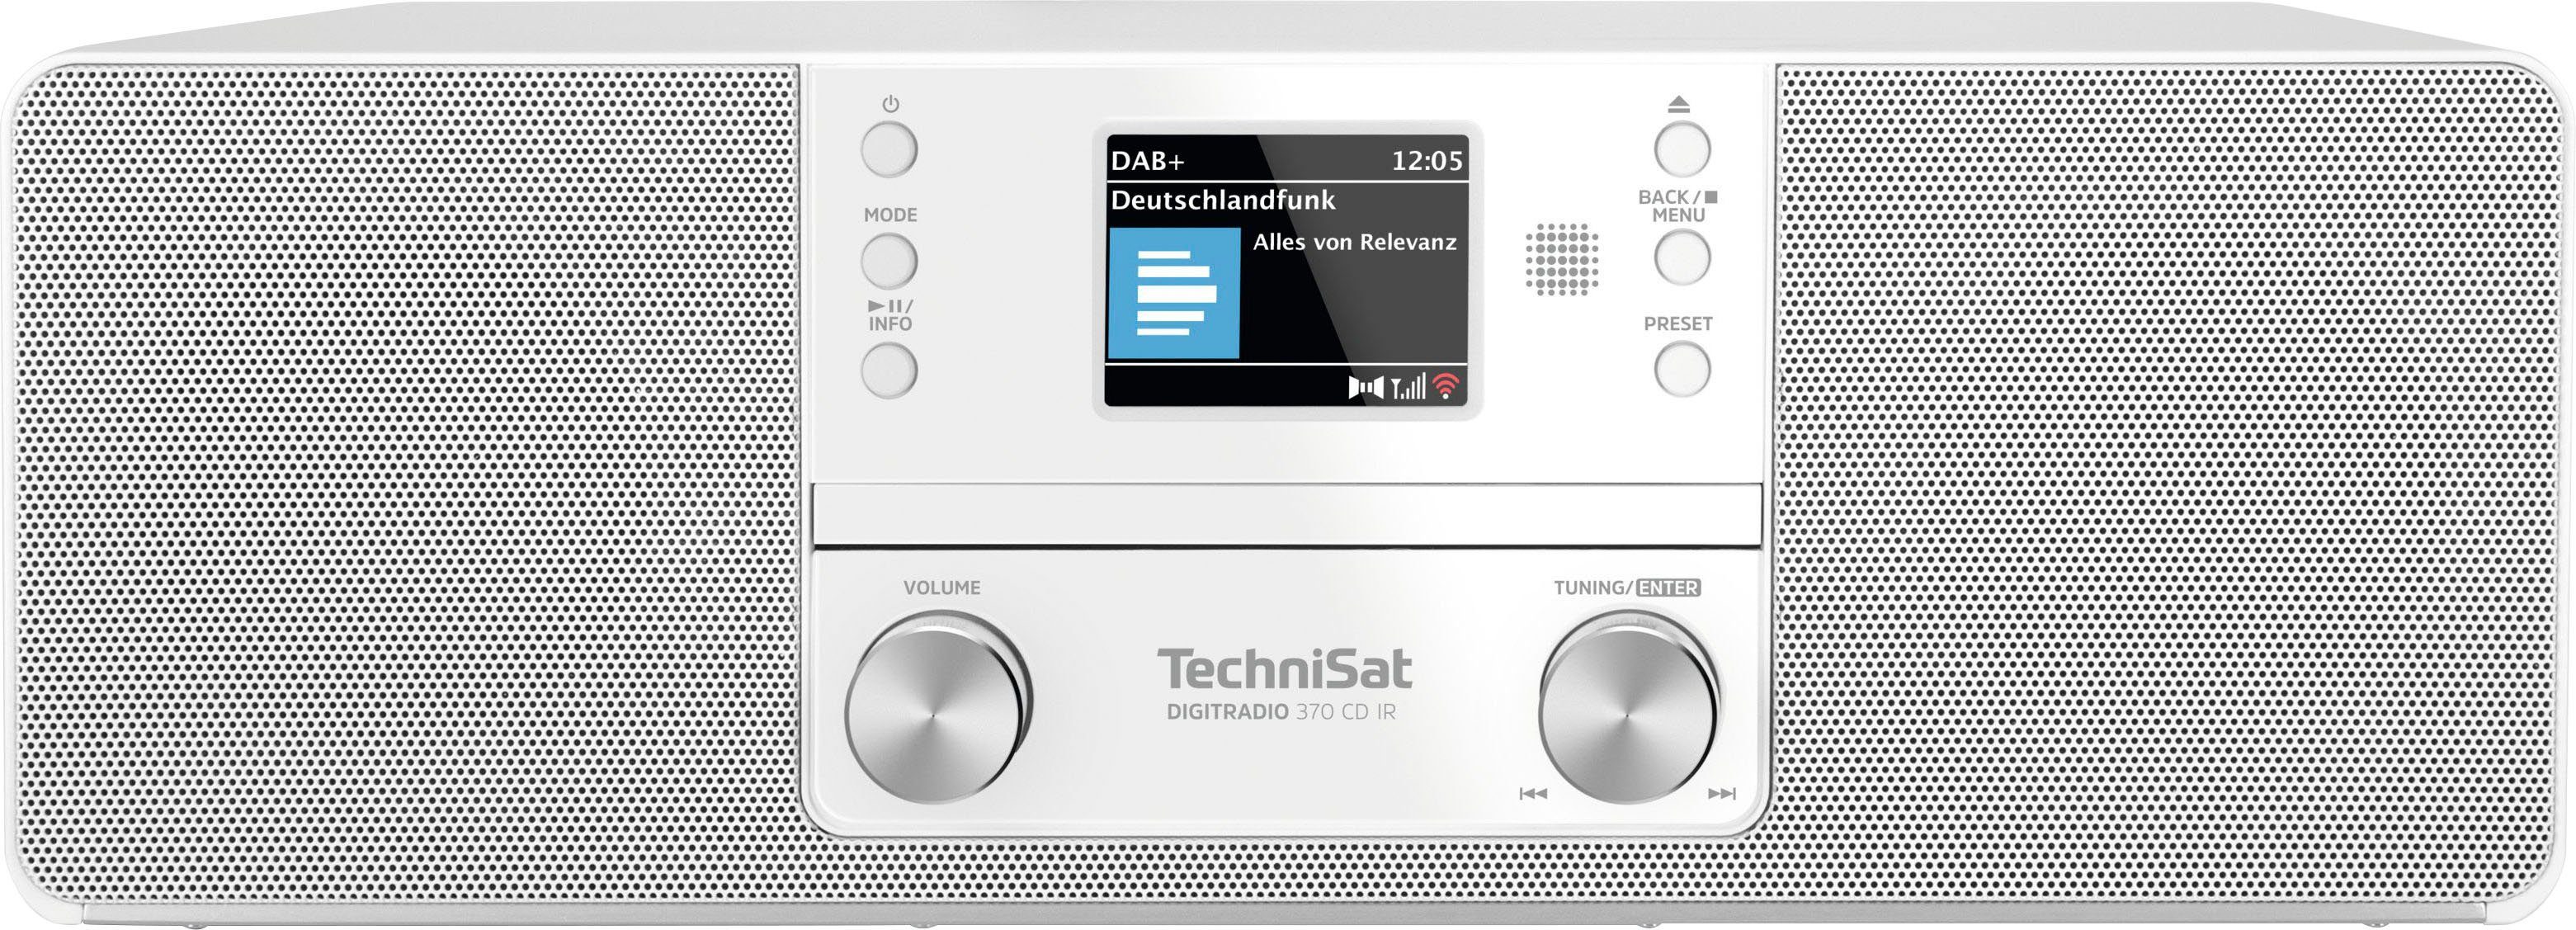 DIGITRADIO IR TechniSat (DAB), Digitalradio (DAB) 10 RDS, CD W) 370 weiß (Digitalradio mit UKW